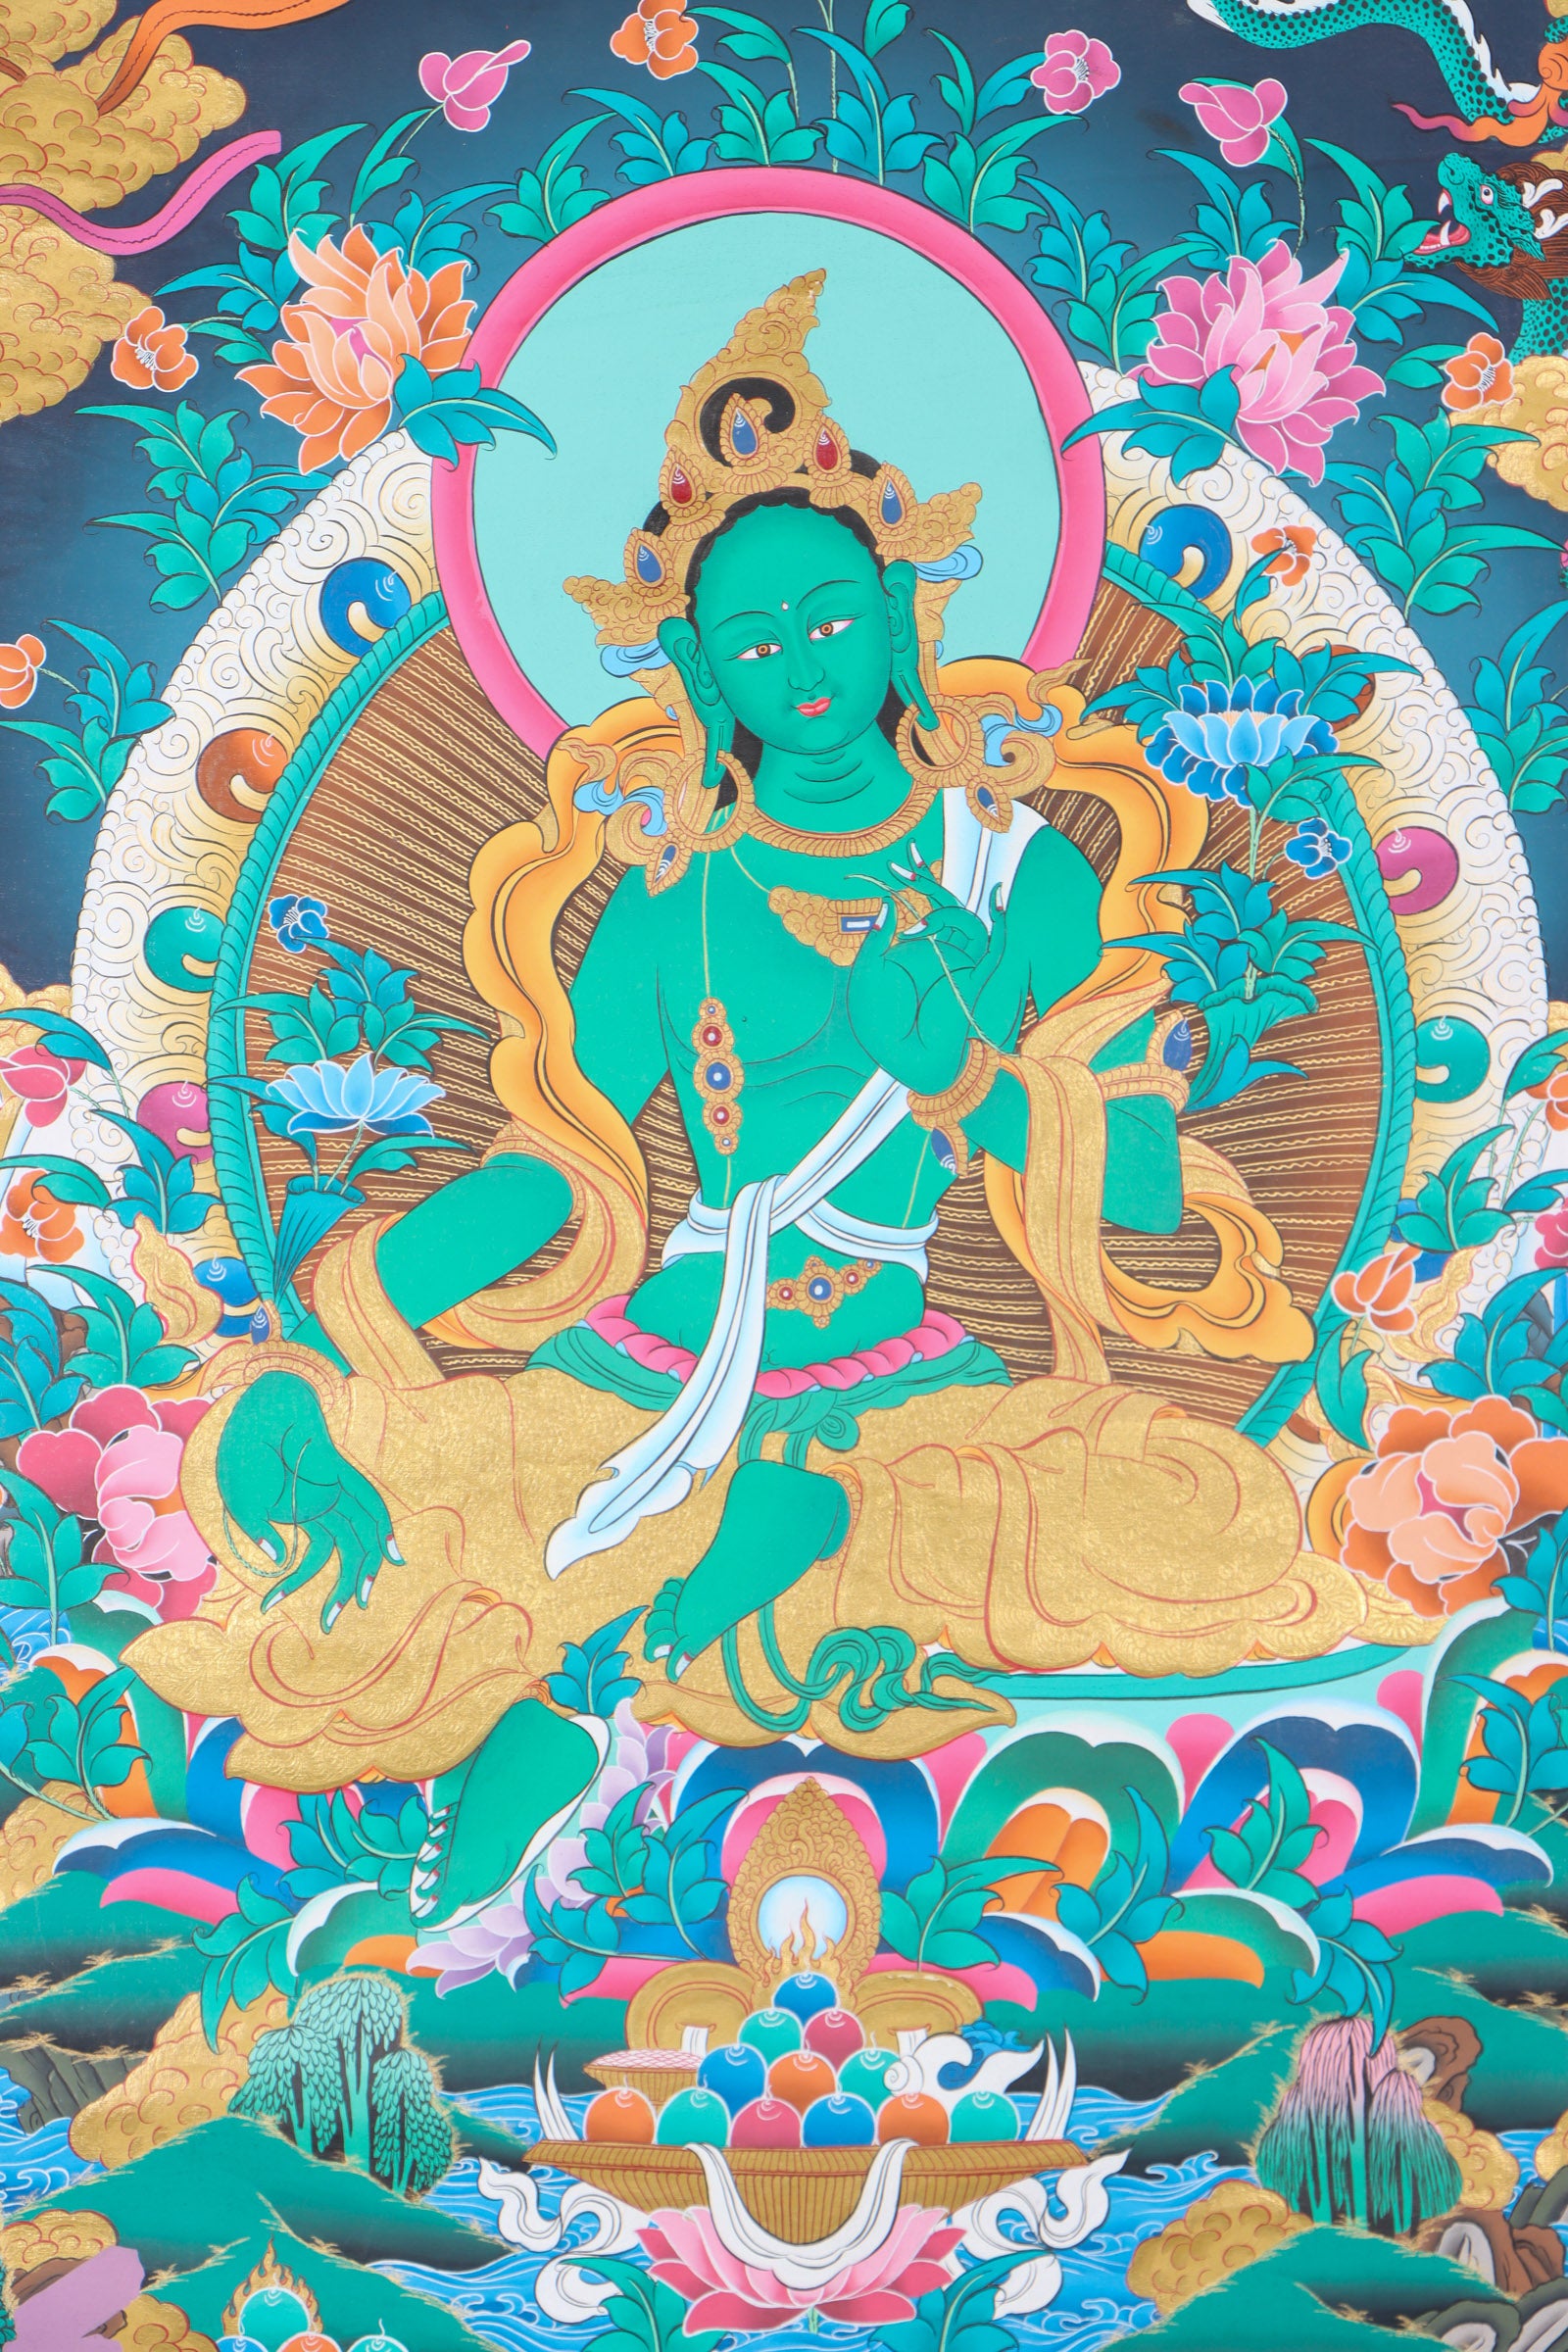 Green Tara Thangka for spiritual protection and guidance.